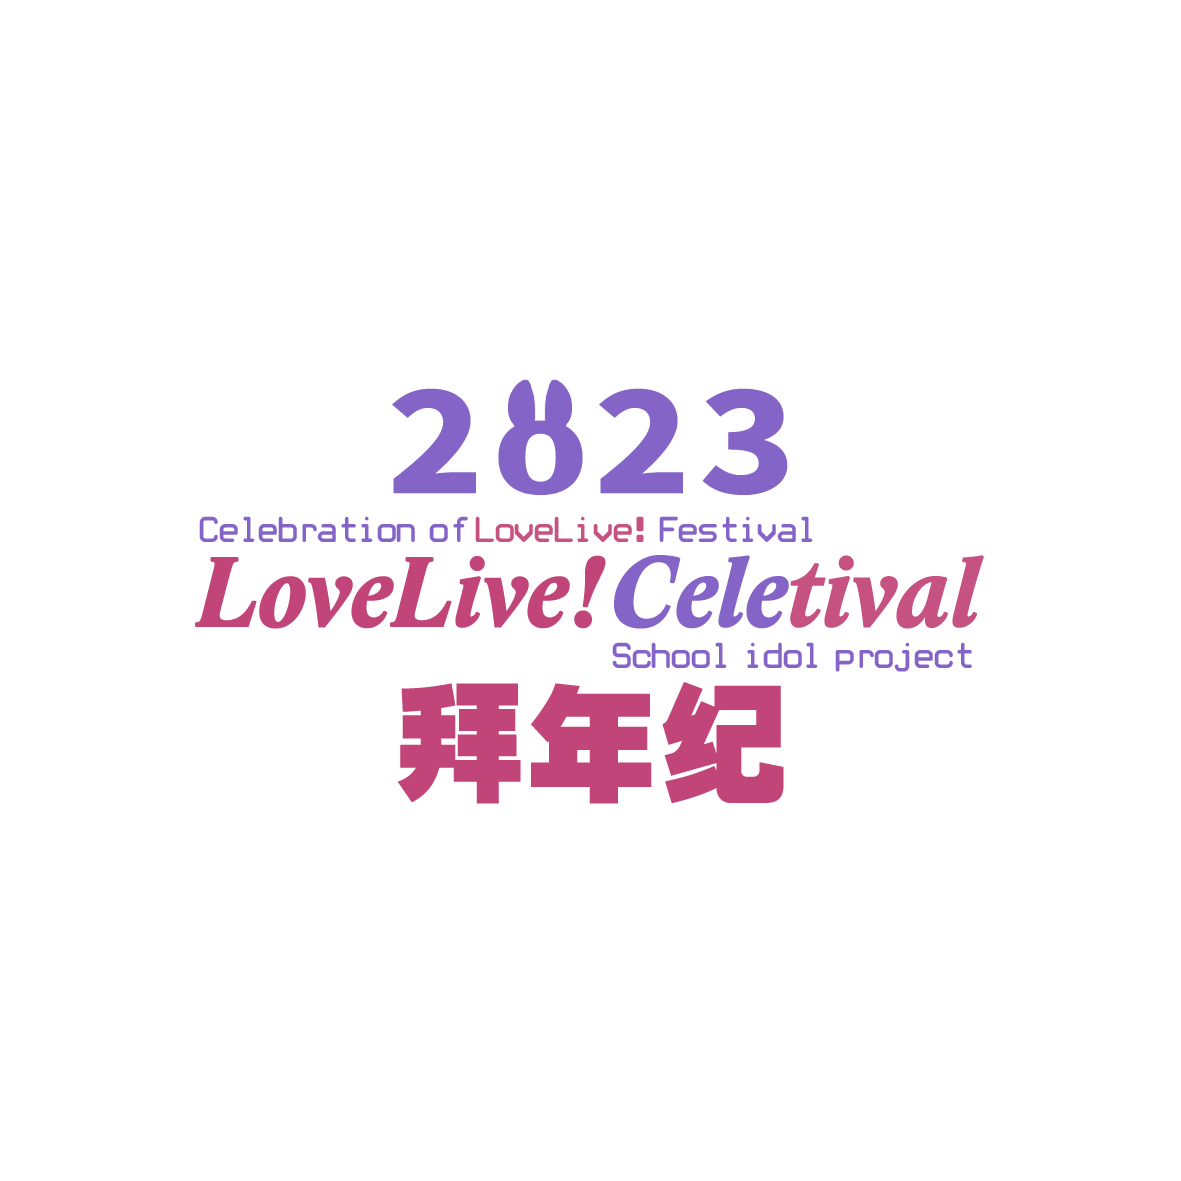 23LL拜年纪logo.png